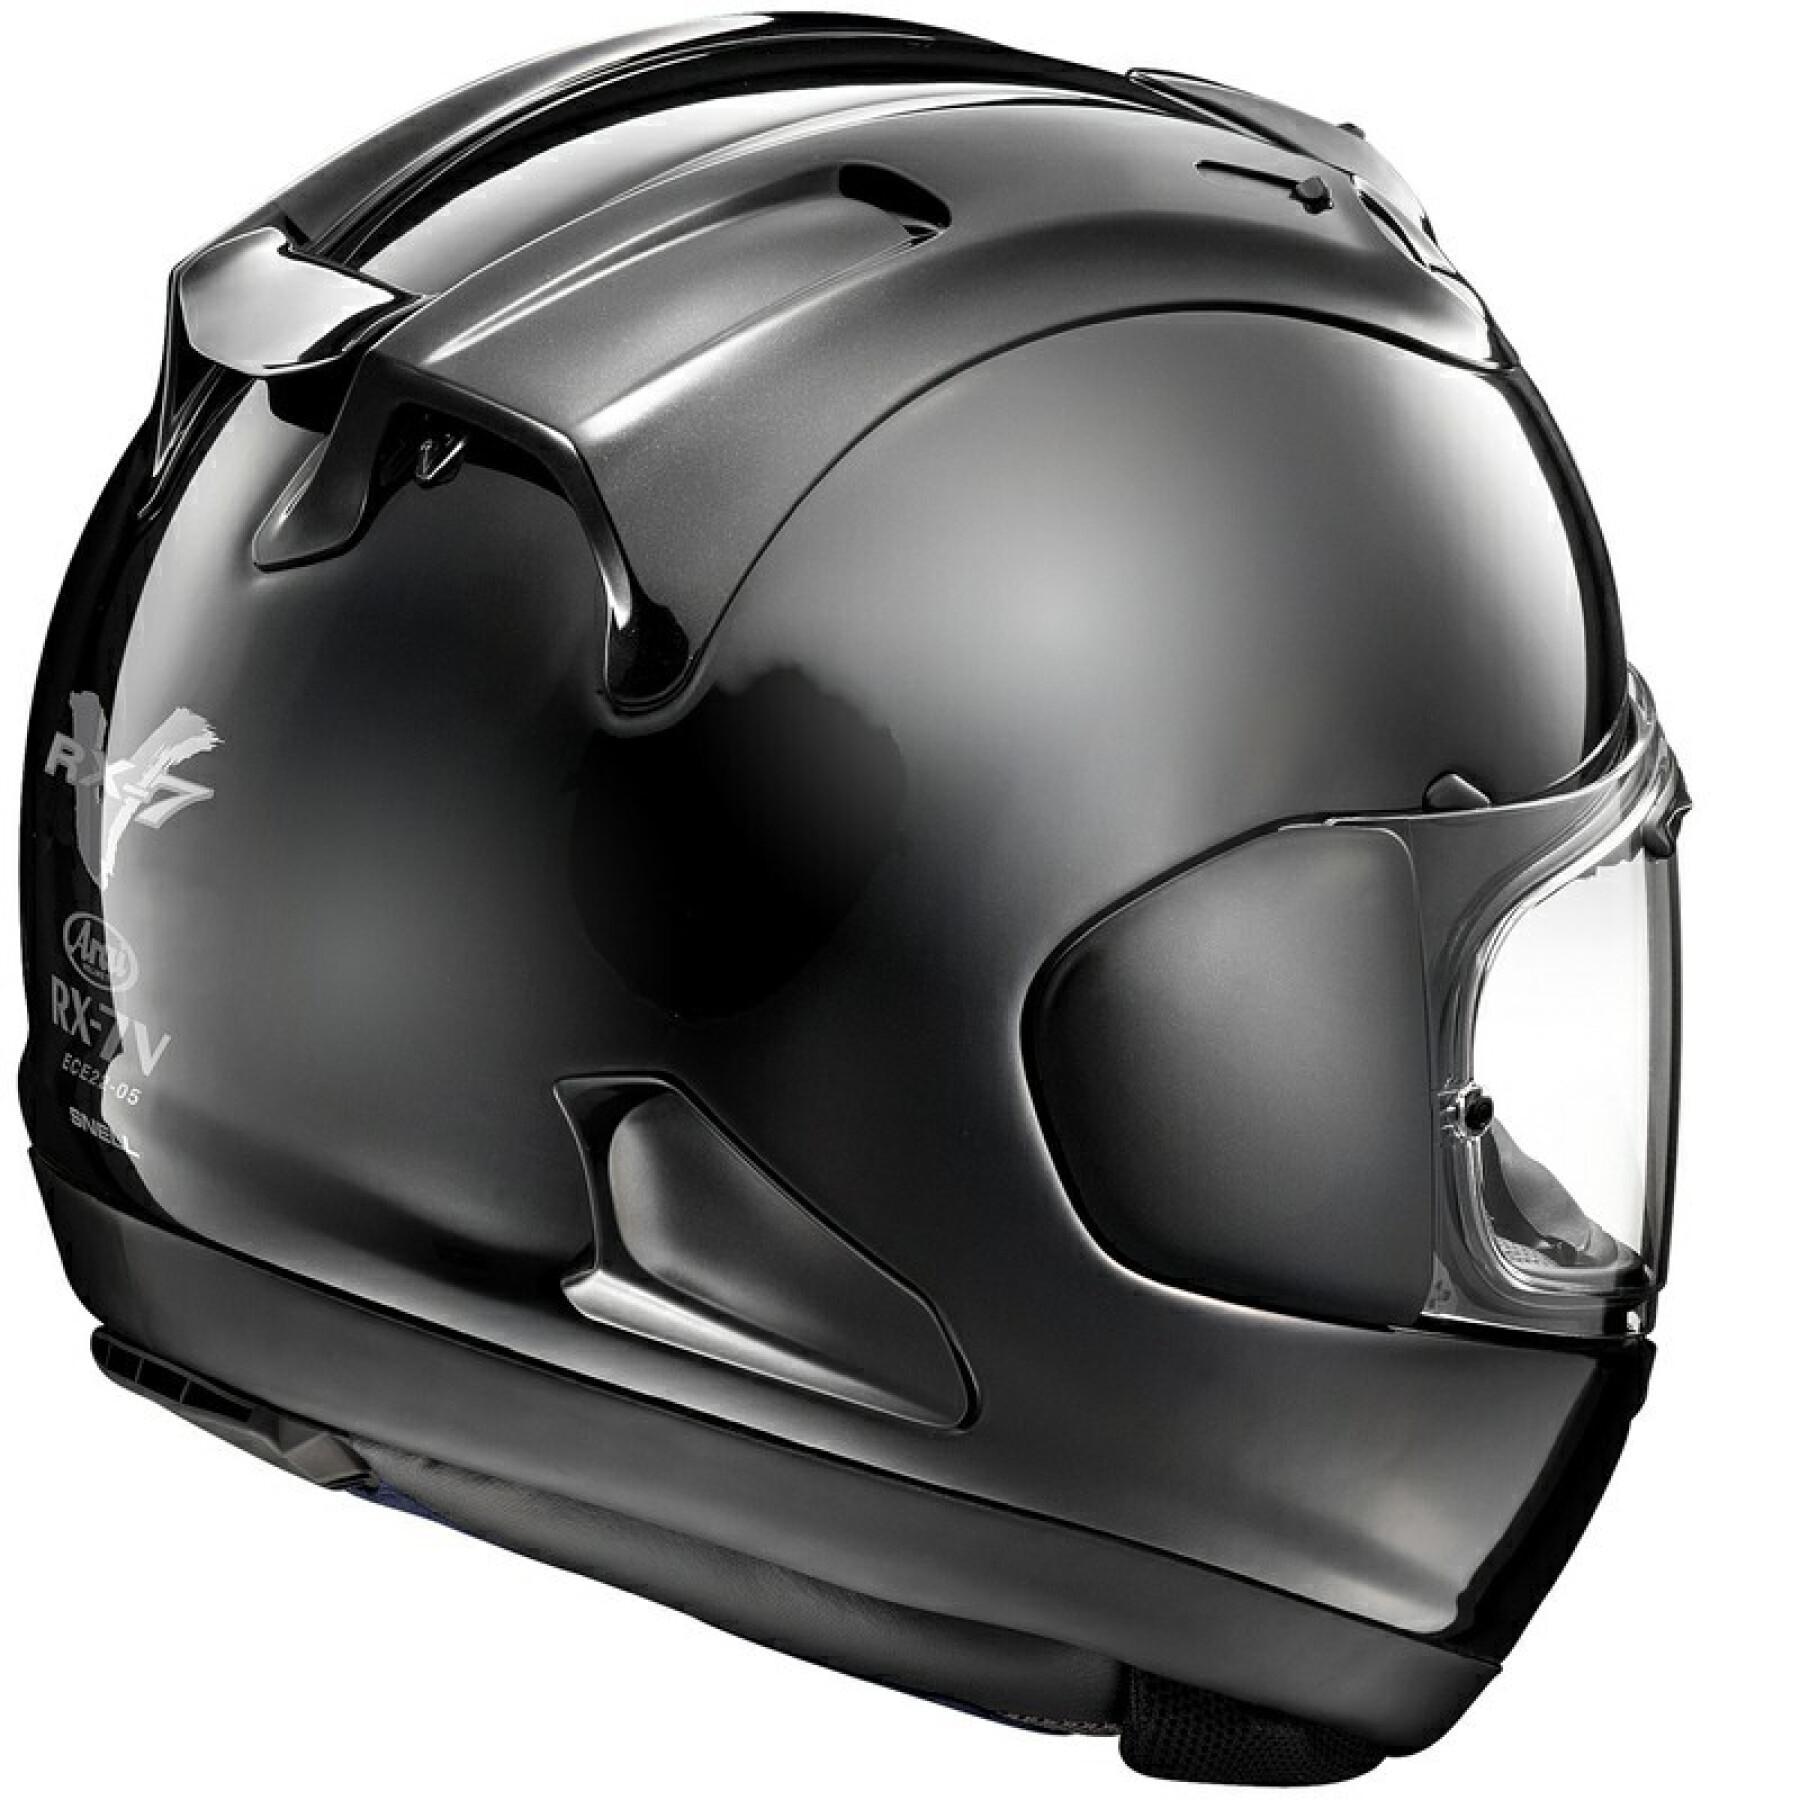 Full face motorcycle helmet Arai RX-7V EVO Diamond